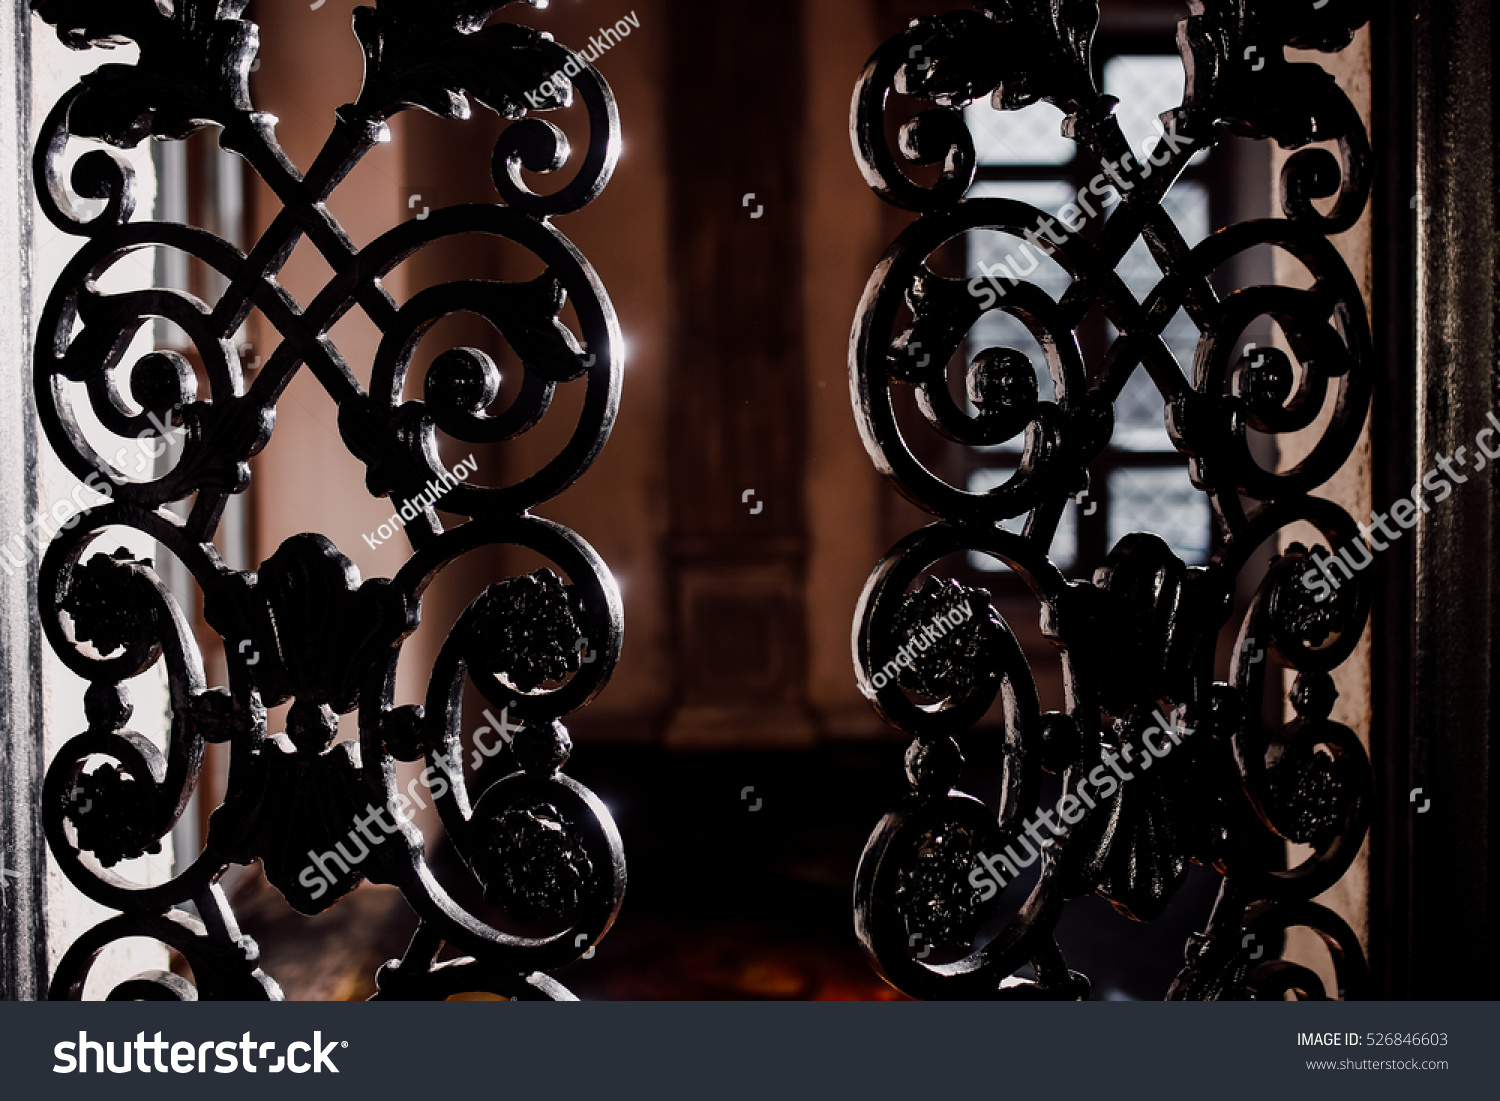 Black Iron Gate Stock Photo 526846603 : Shutterstock